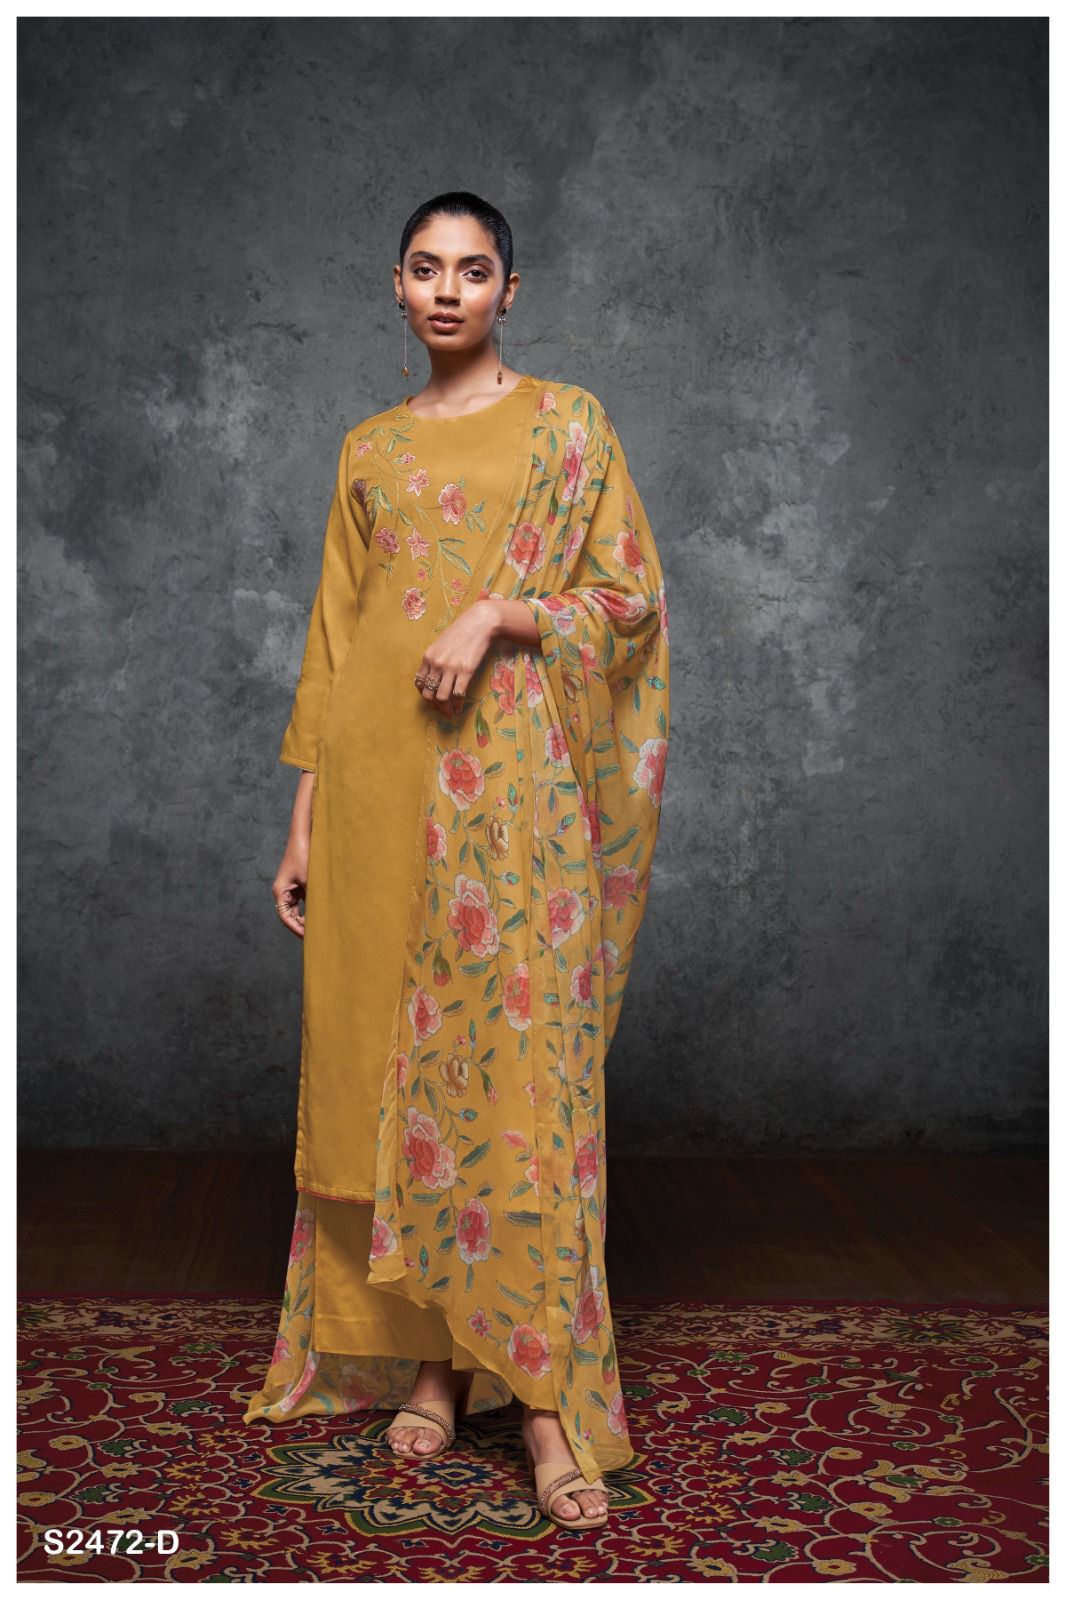 Amyrah 2472 Ganga Cotton Silk Plazzo Style Suits